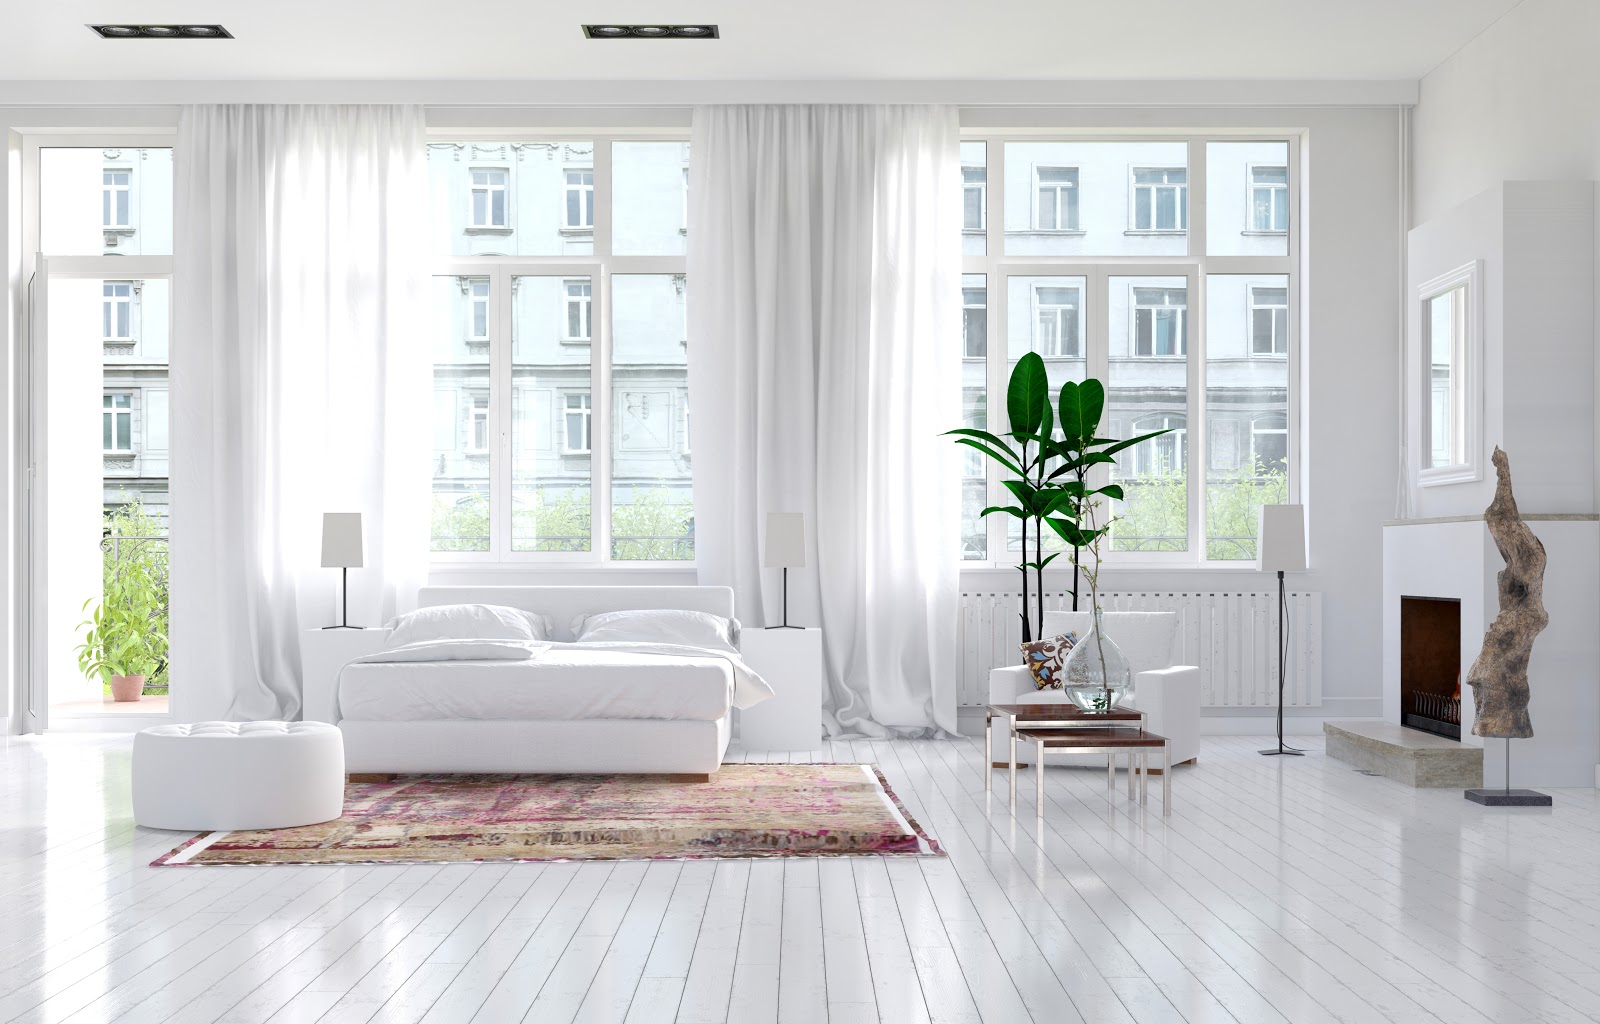 Jednoduché splývavé záclony pomohou zútulnit každý prostor. Zdroj: http://www.bigstockphoto.com/image-94387715/stock-photo-large-spacious-monochromatic-white-bedroom-with-fireplace%2C-a-double-bed-and-large-view-windows-with